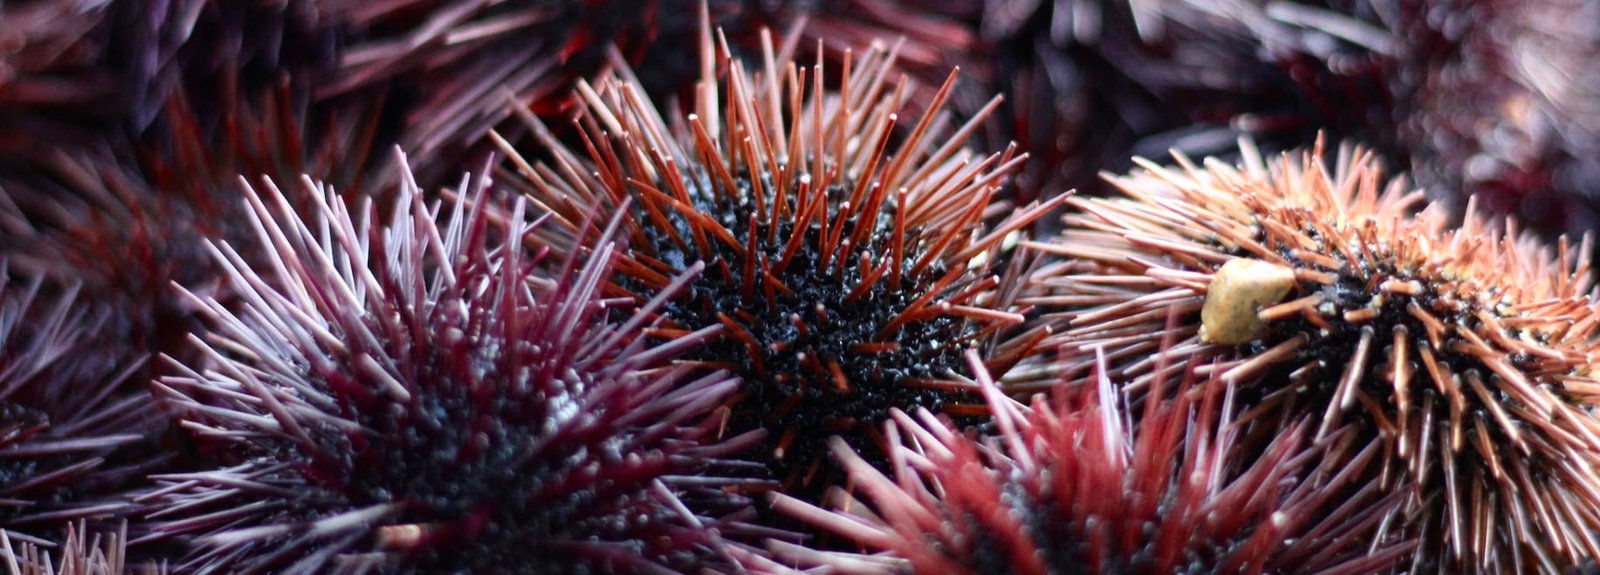 Red Sea Urchin Petshyme